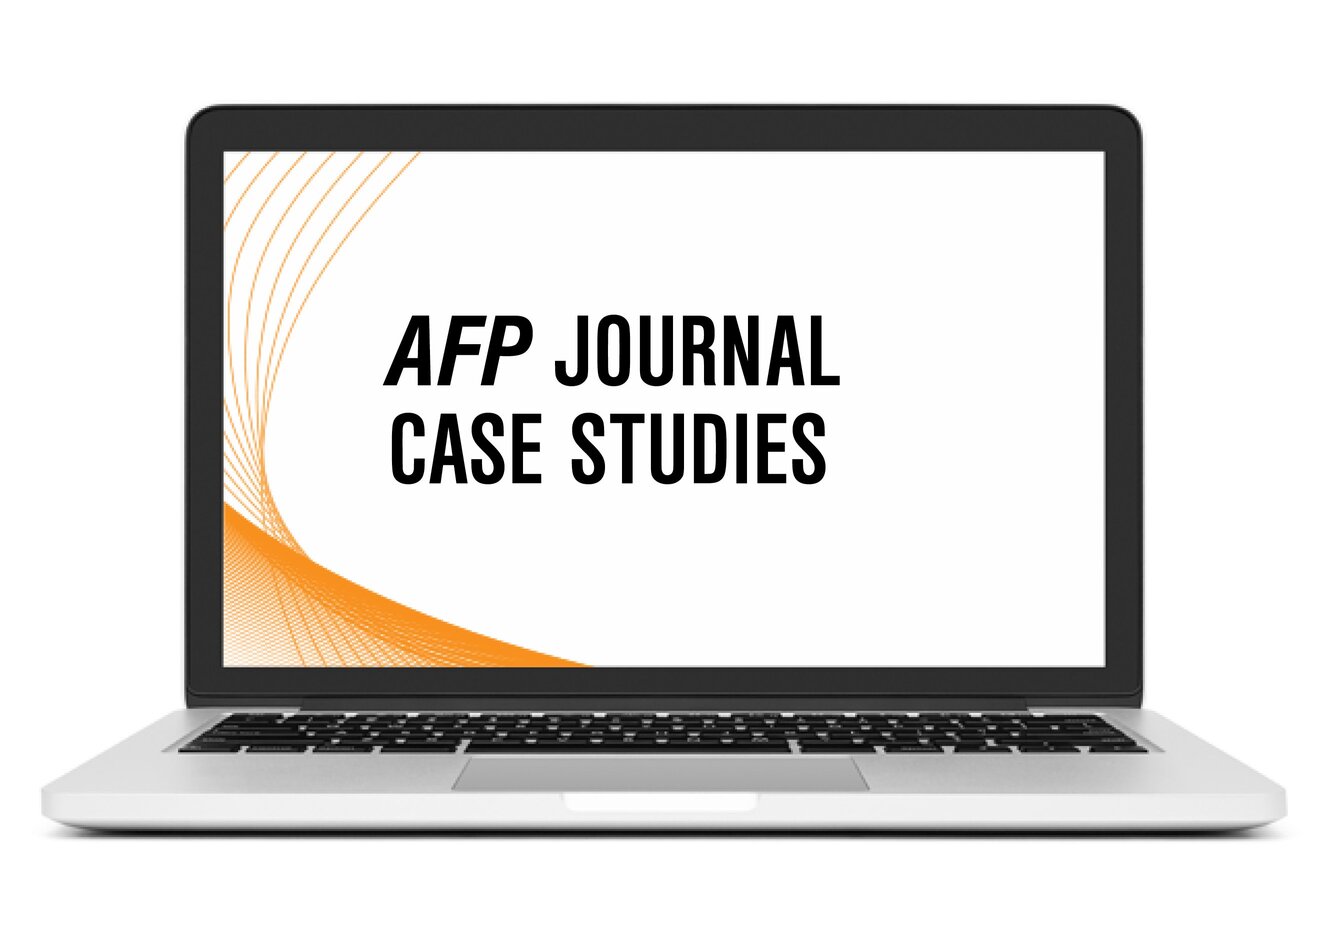 AFP Journal Case Studies Title on Laptop